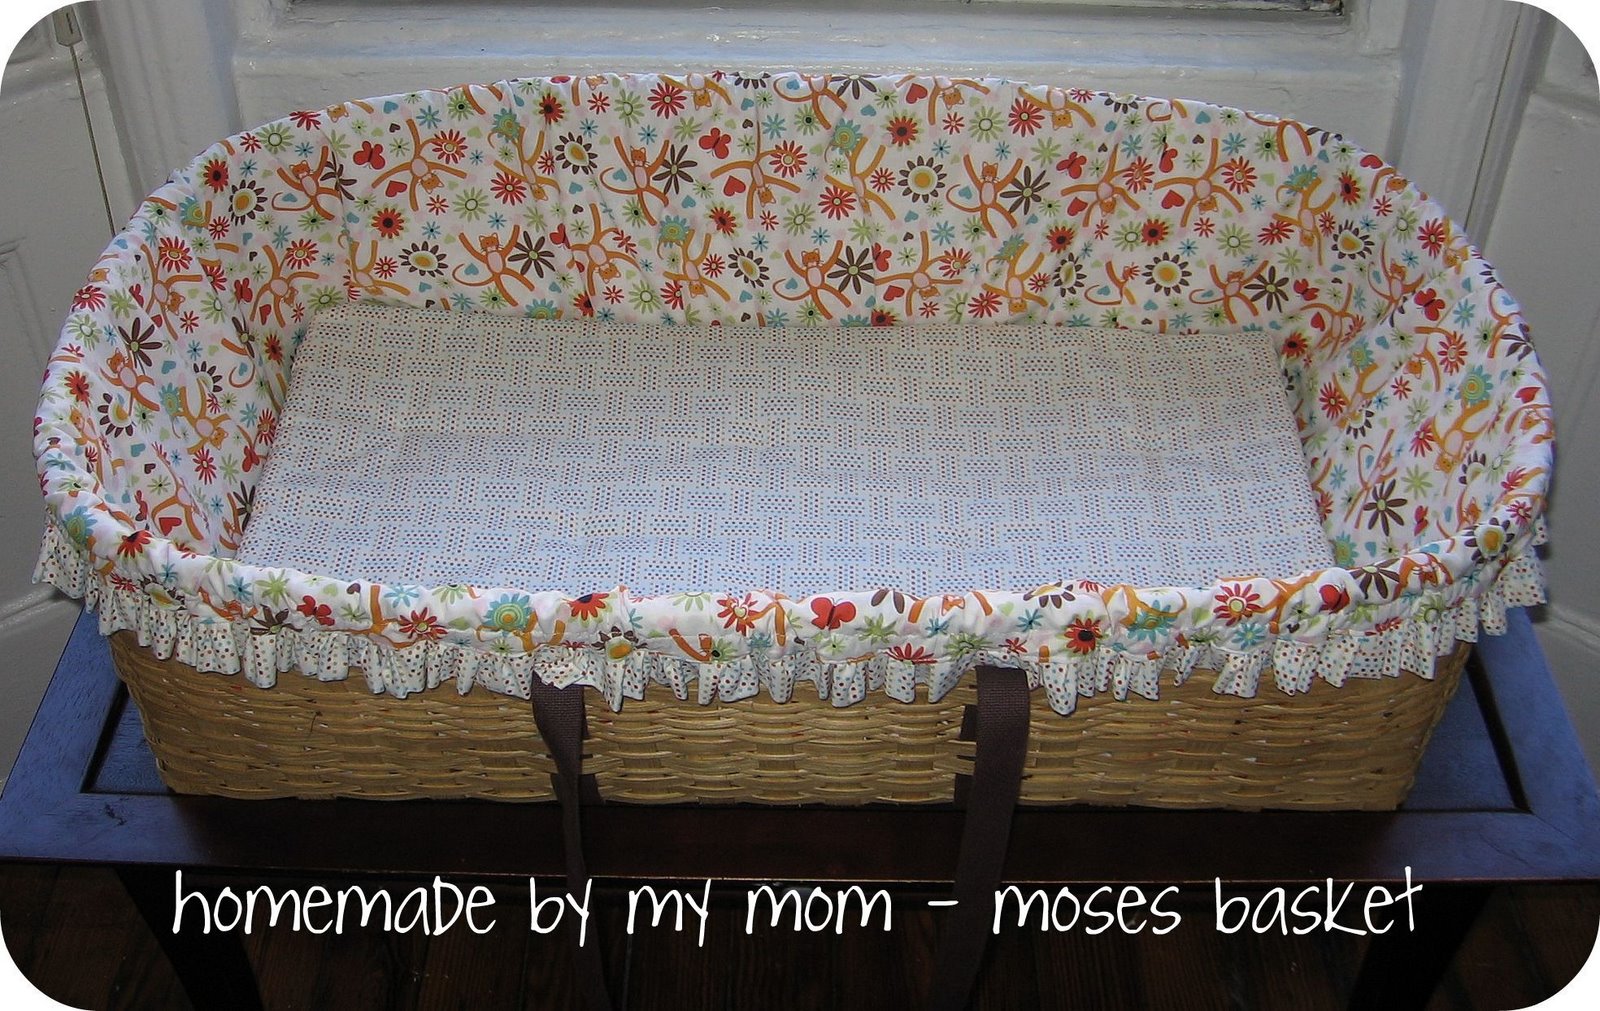 [homemade+by+mom+moses+basket.jpg]